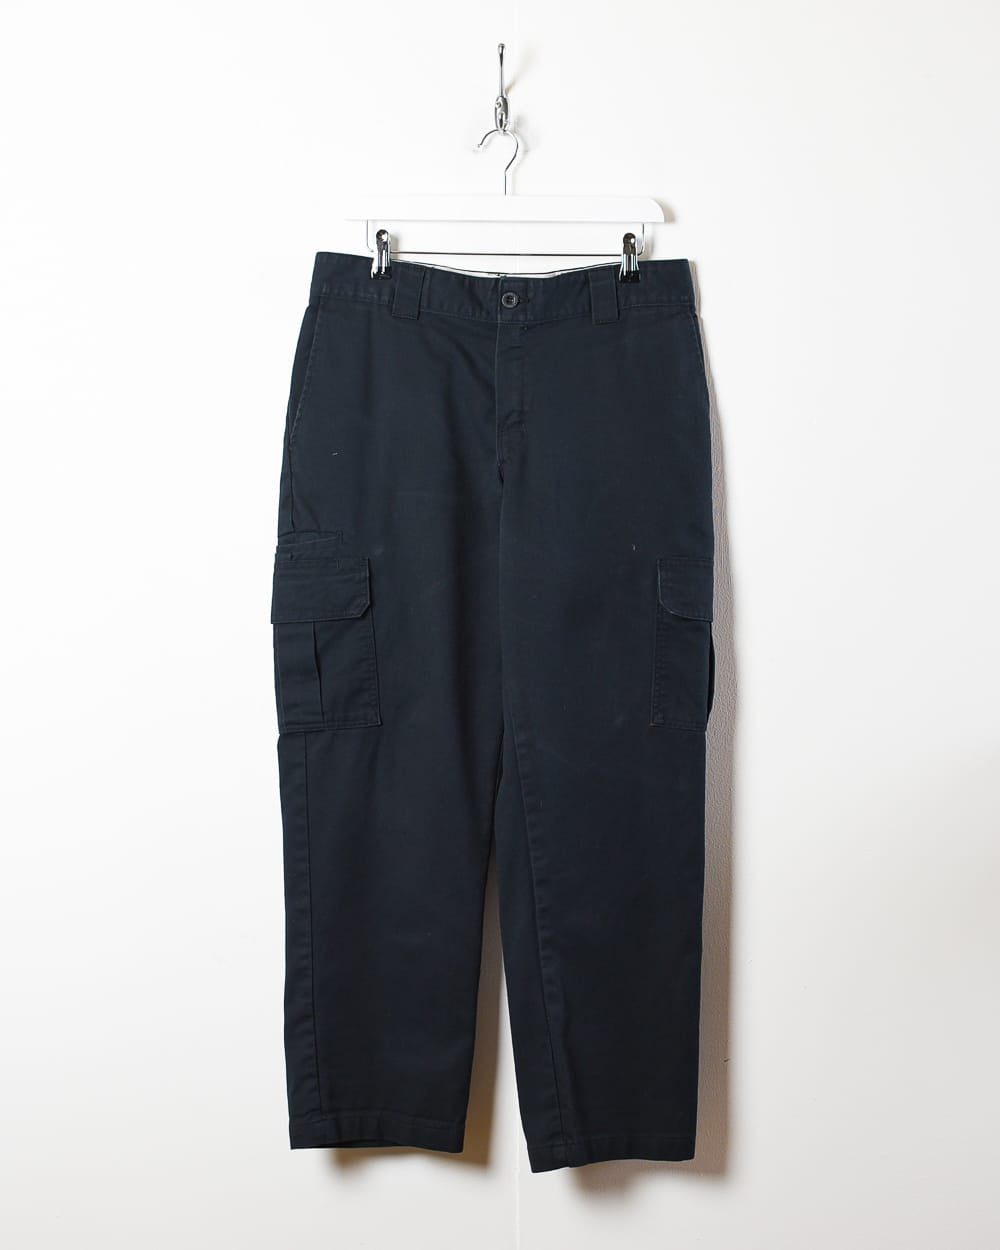 Oswin Mens Workwear Trousers Cargo Cordura Work Black - Elastic Waist  Render Pro | eBay